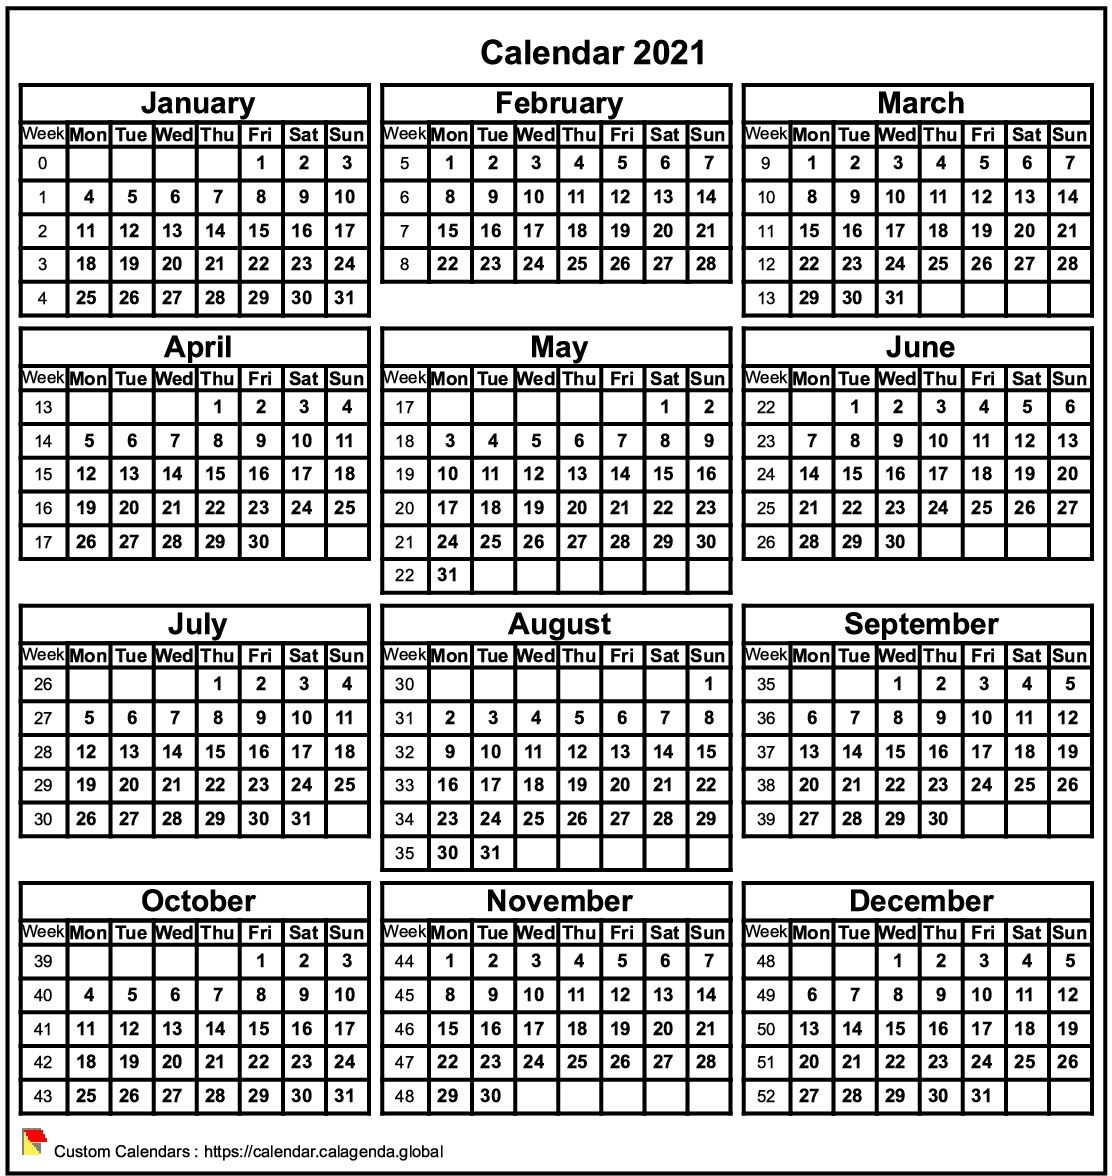 Calendar to print mini format 3x4